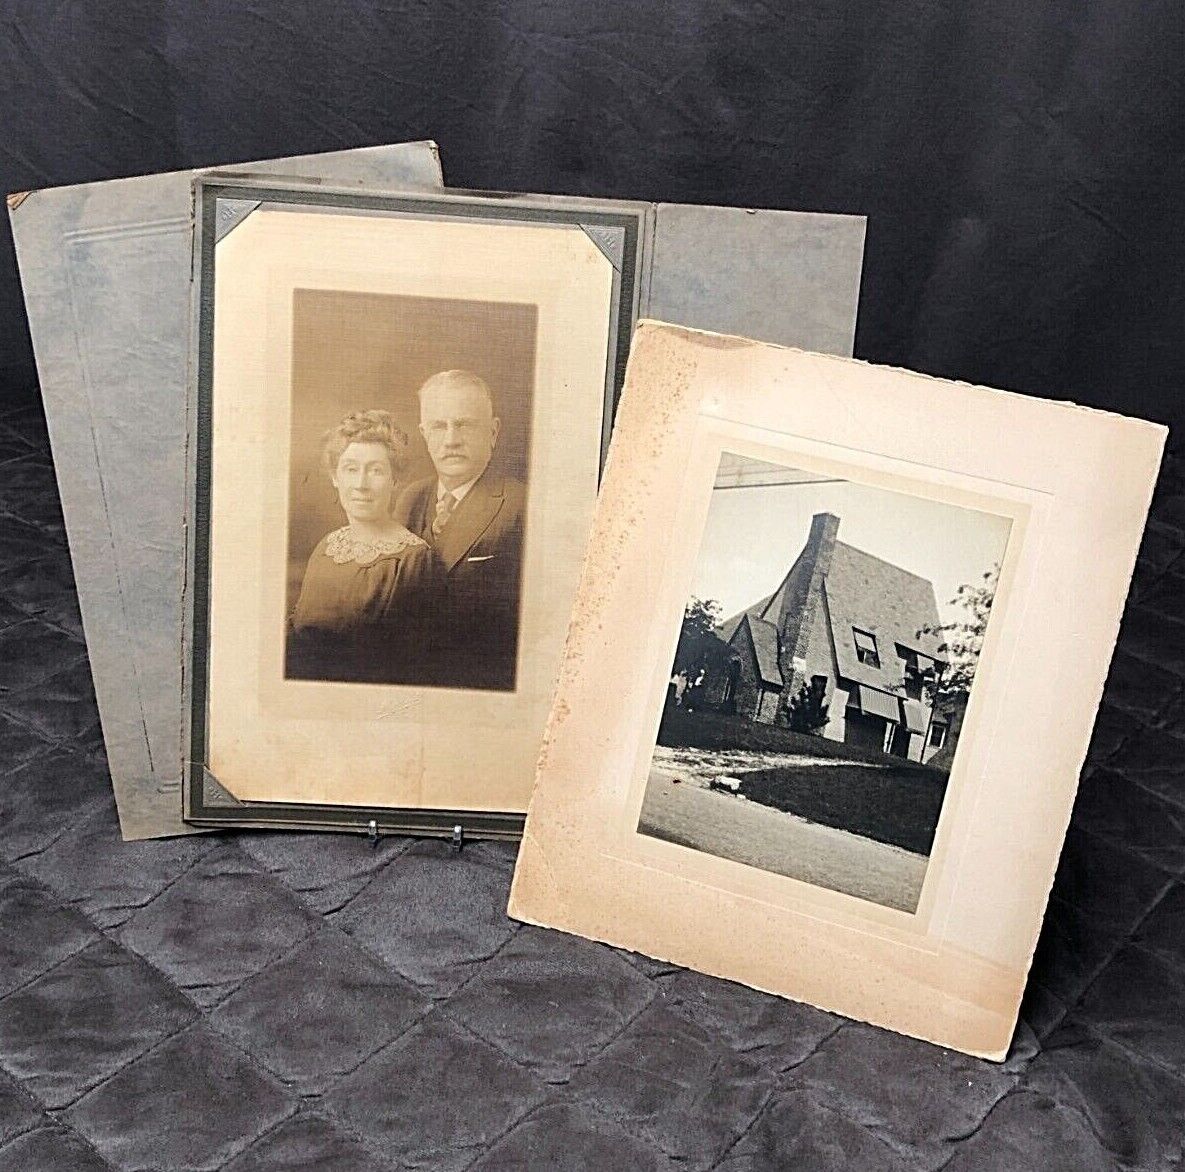 Lot of 2 Vintage Antique Old Hartsook Photographs Cabinet Cards Portrait Photos